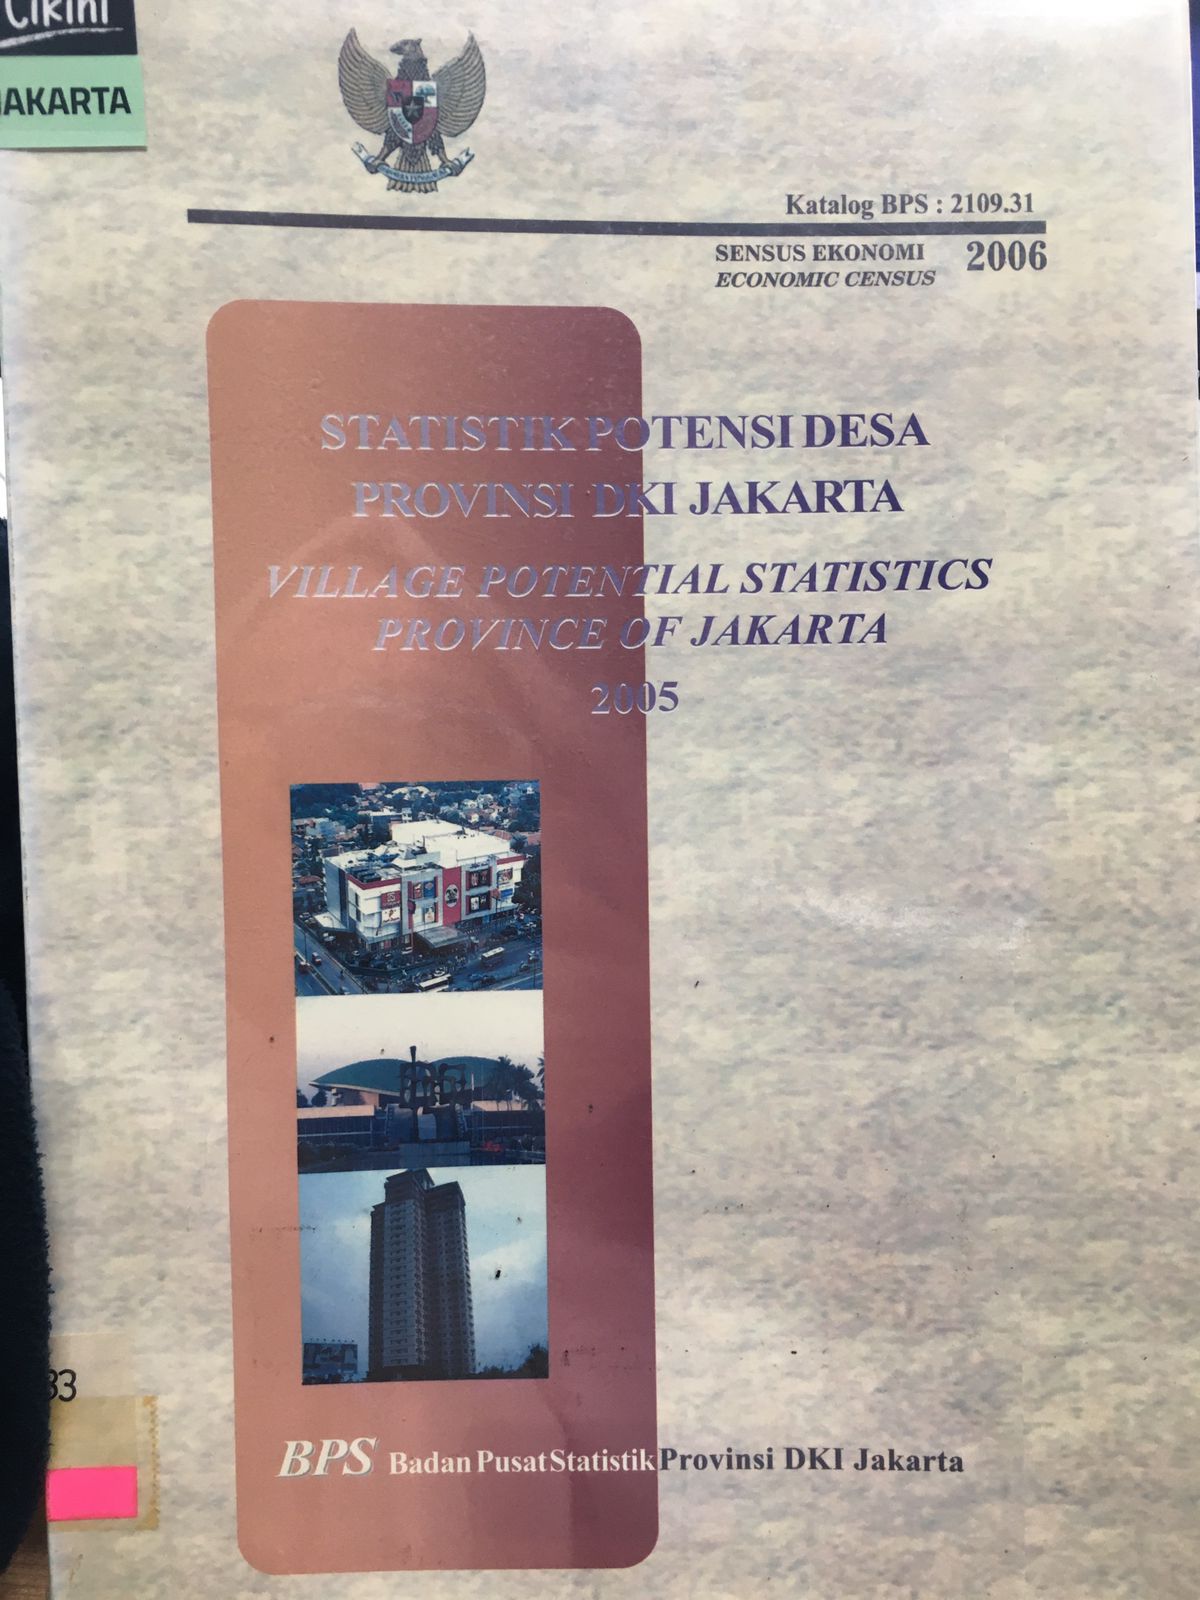 Statistik potensi desa provinsi DKI Jakarta = village potential statistics province of Jakarta 2005